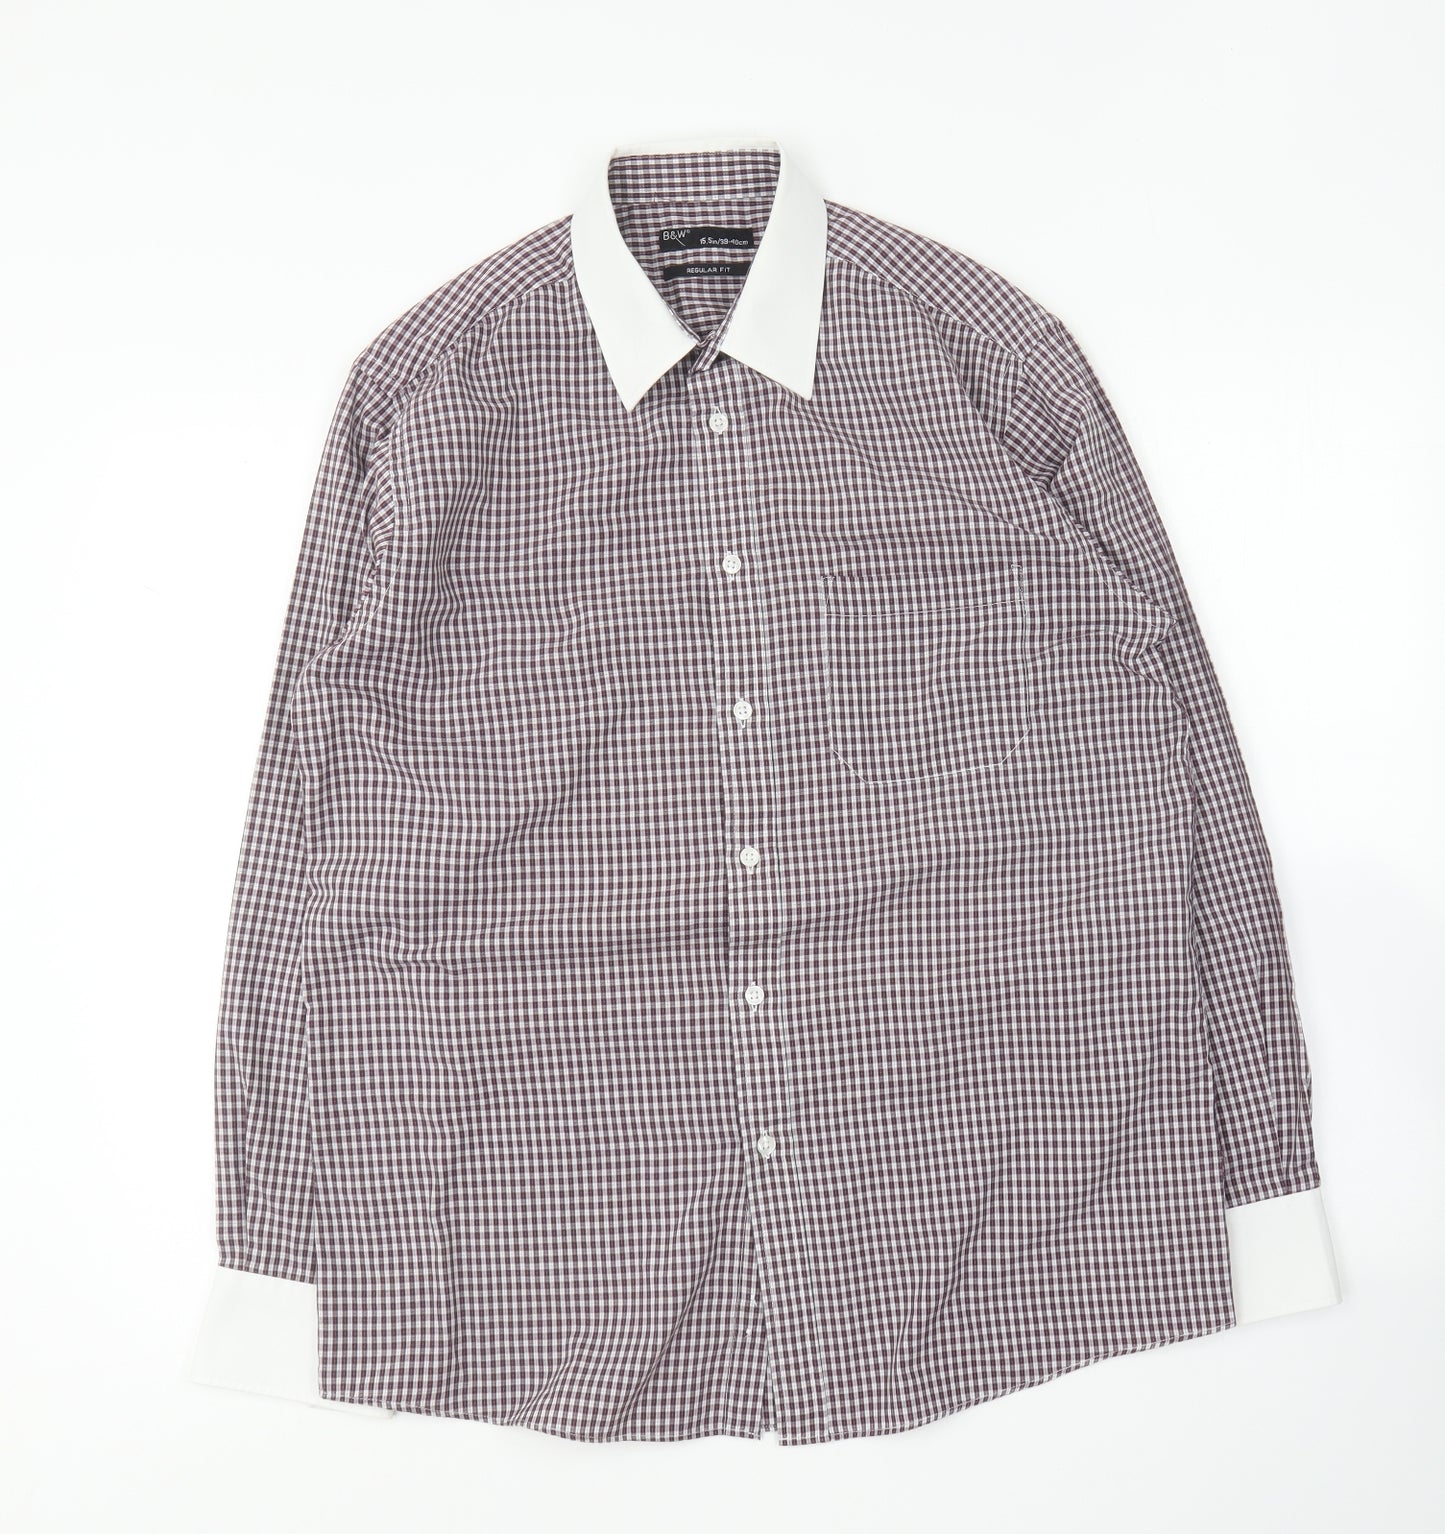 B&W Mens Purple Check Cotton Button-Up Size 15.5 Collared